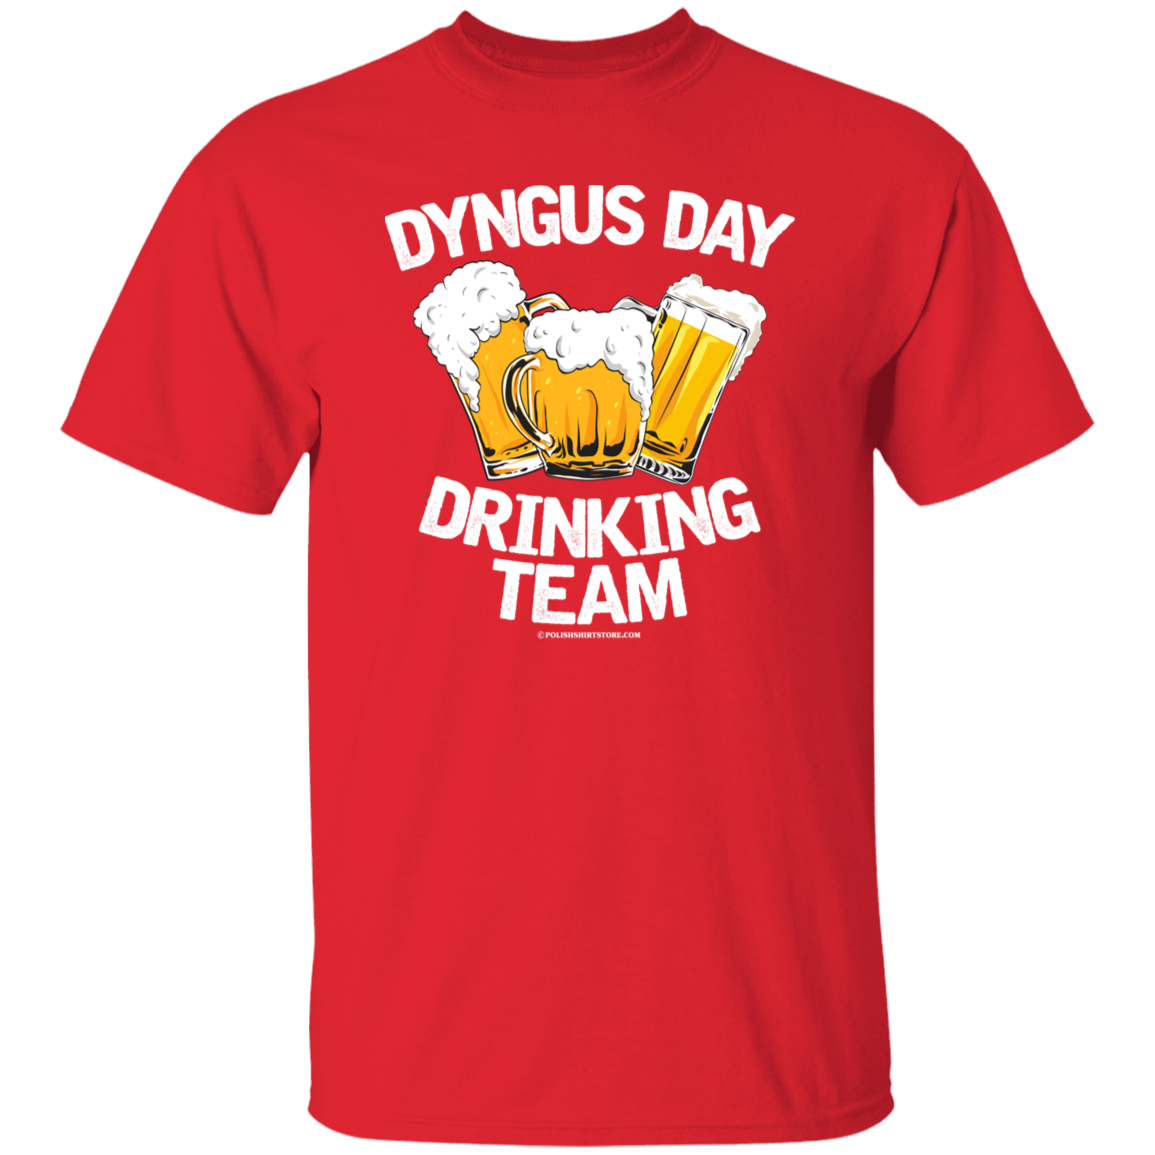 Dyngus Day Drinking Team Apparel CustomCat G500 5.3 oz. T-Shirt Red S